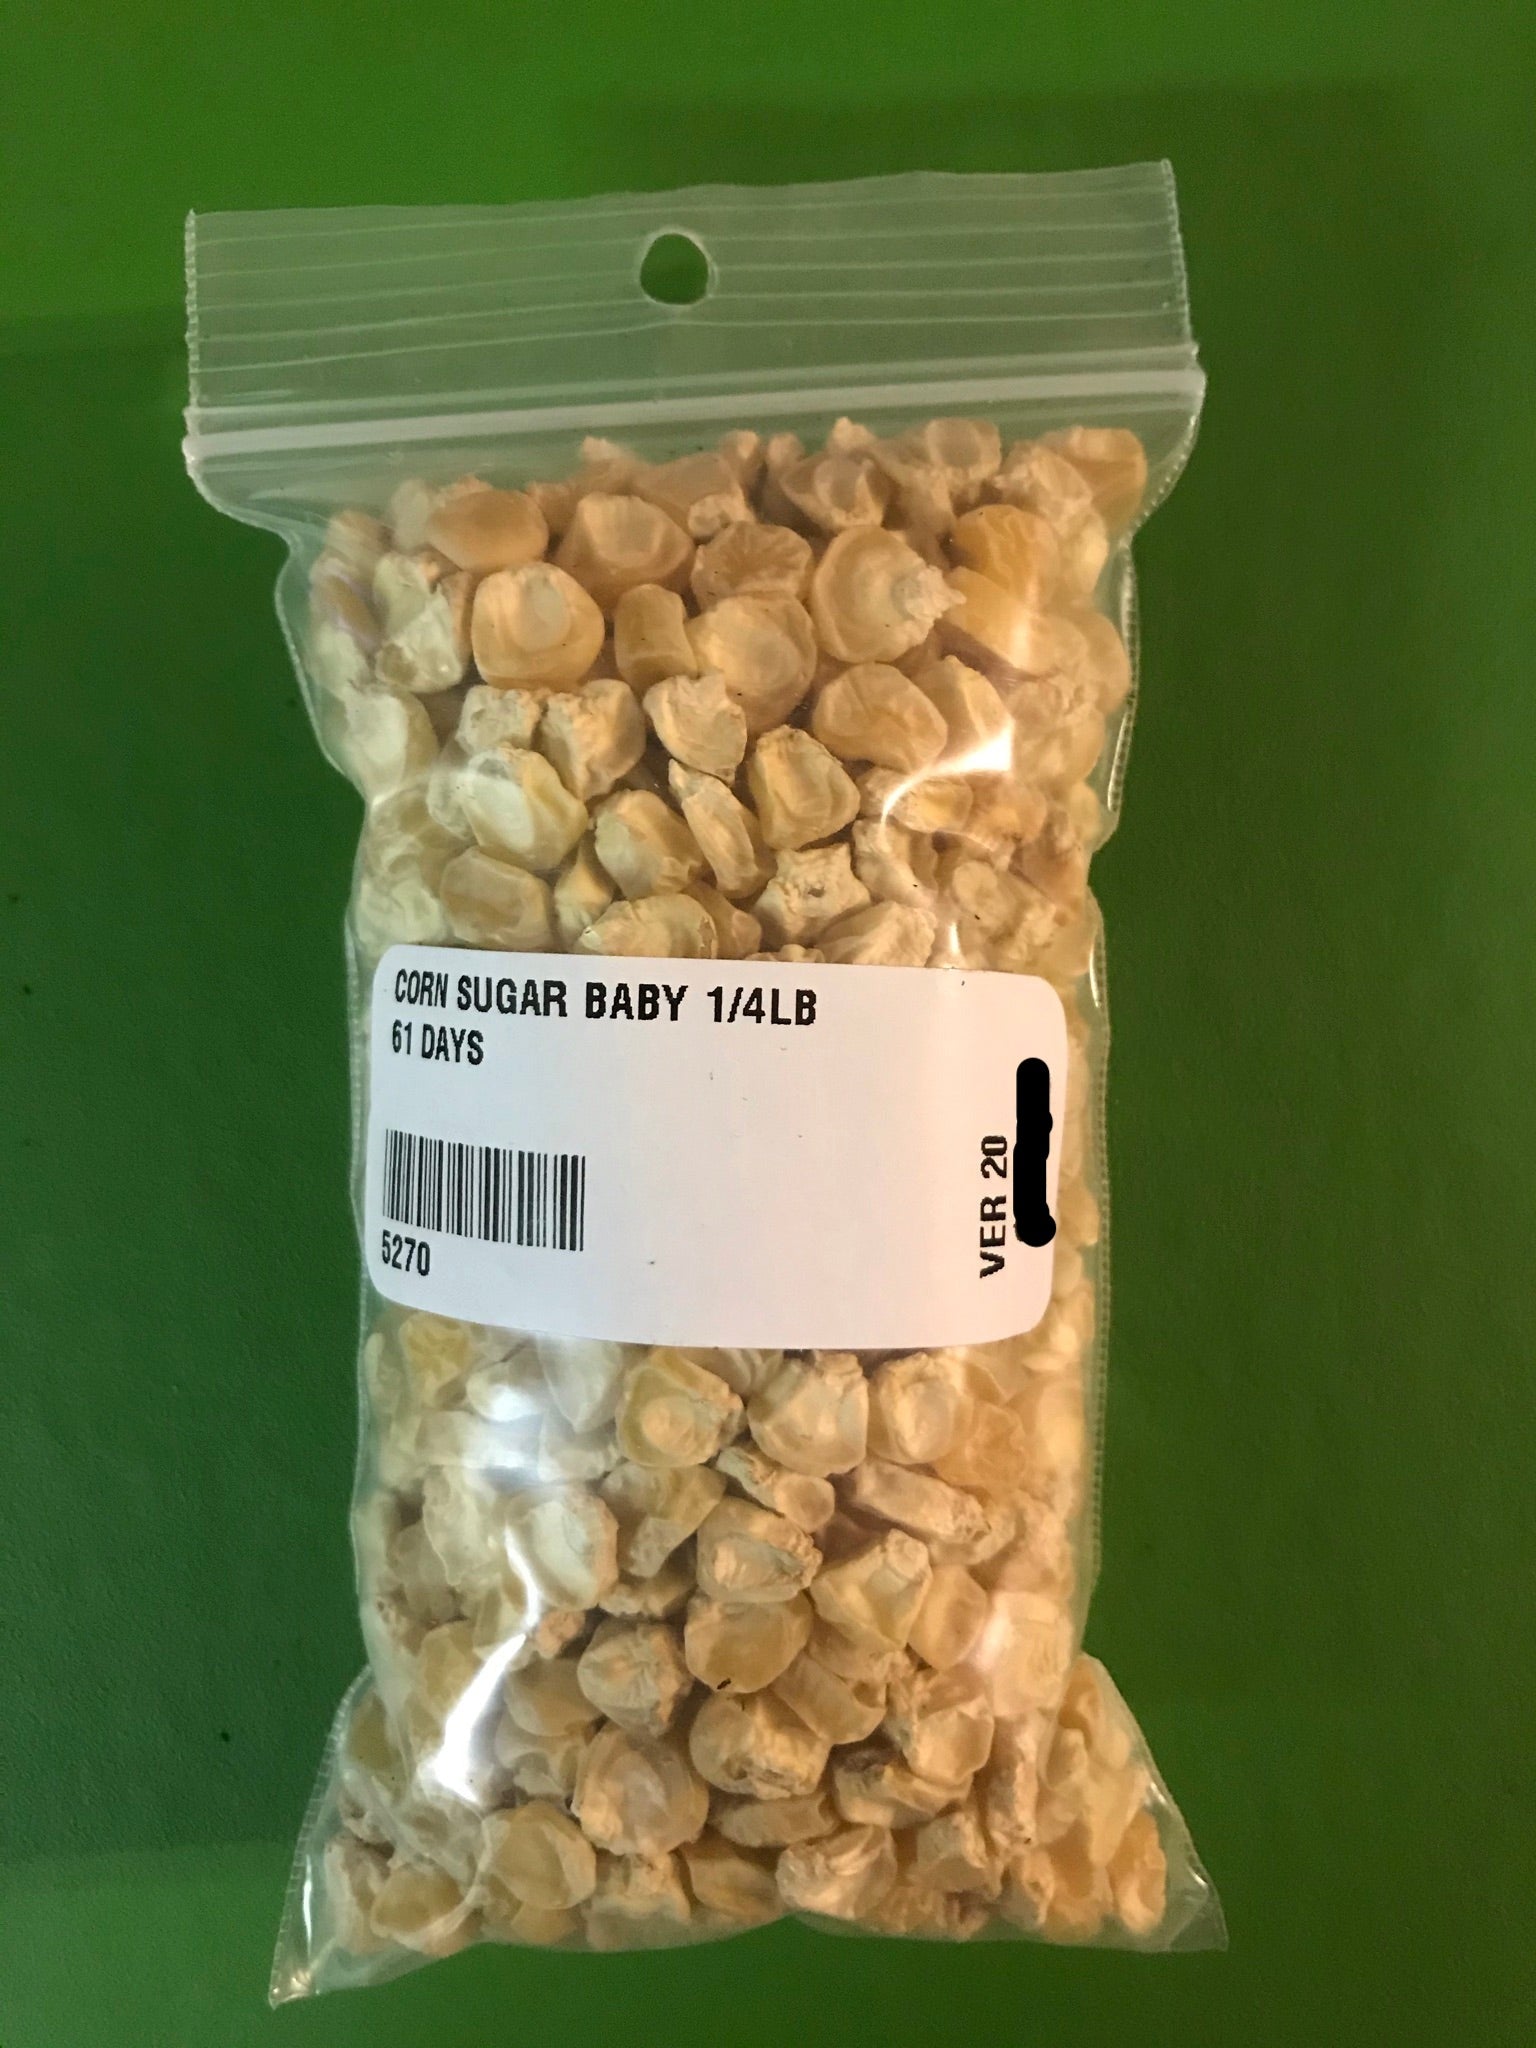 Sugar Baby Sweet Corn Seeds (61 Days) - 1/4 lb - Bulk